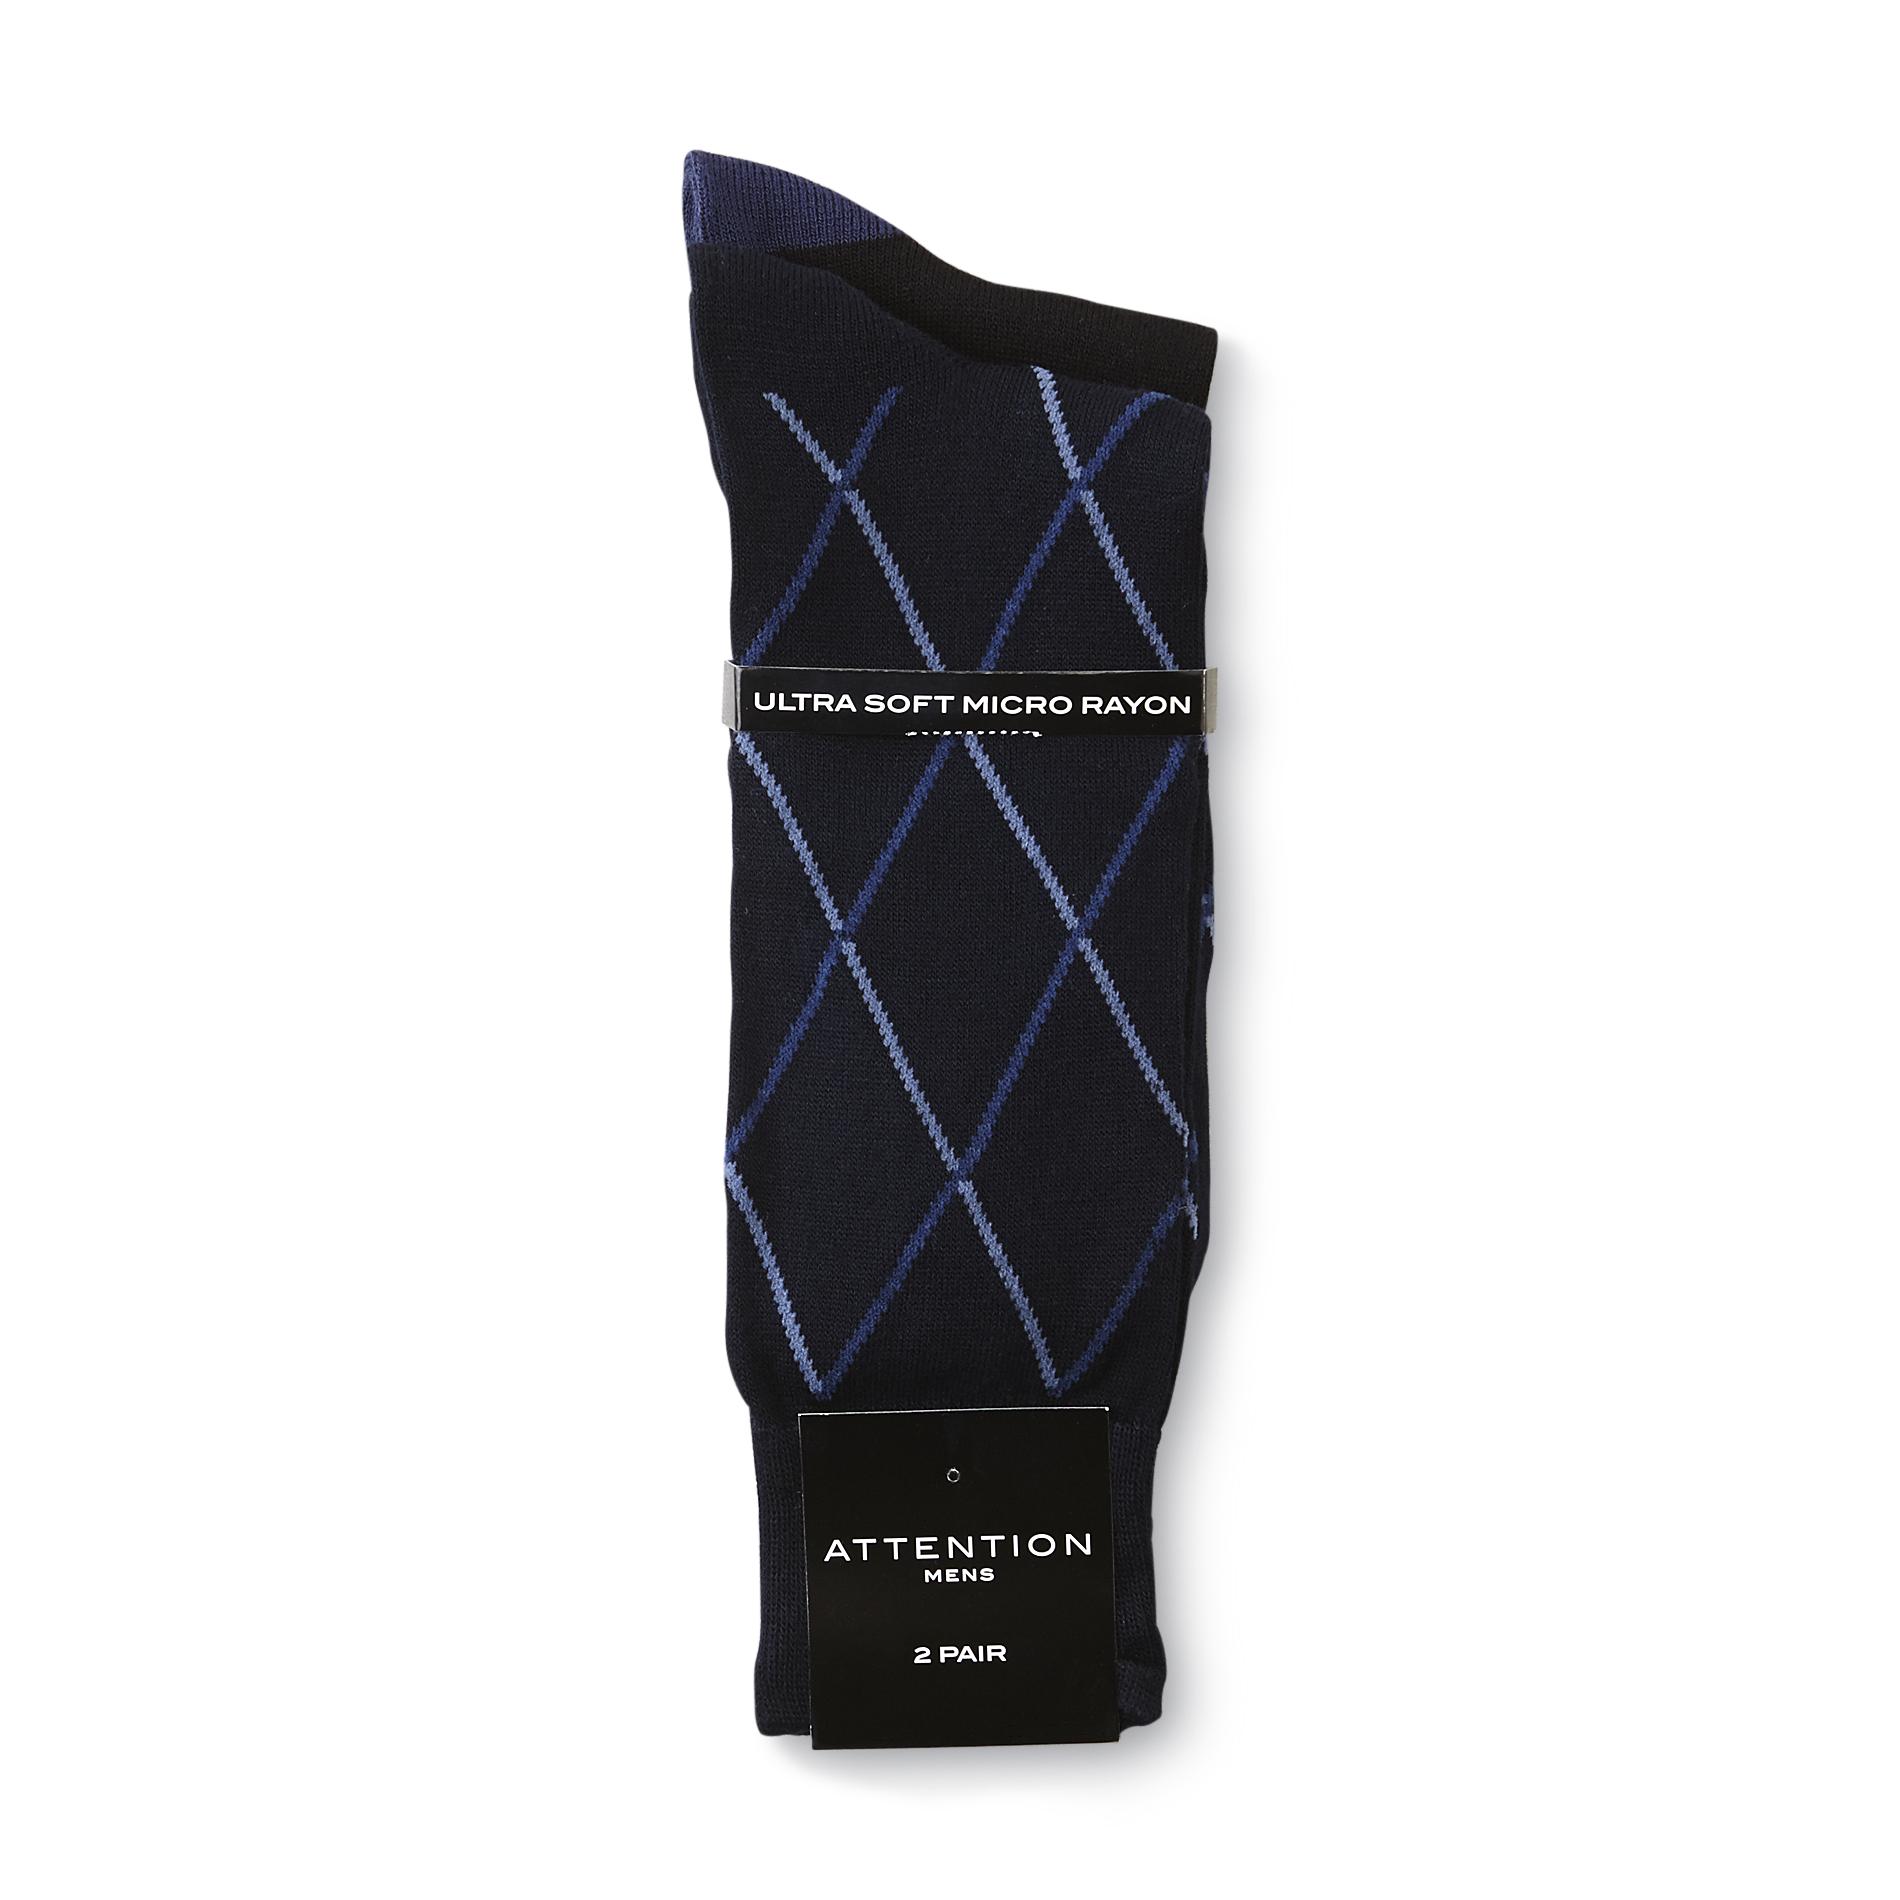 Attention Men's 2-Pairs Micro Rayon Socks - Diamond/Solid